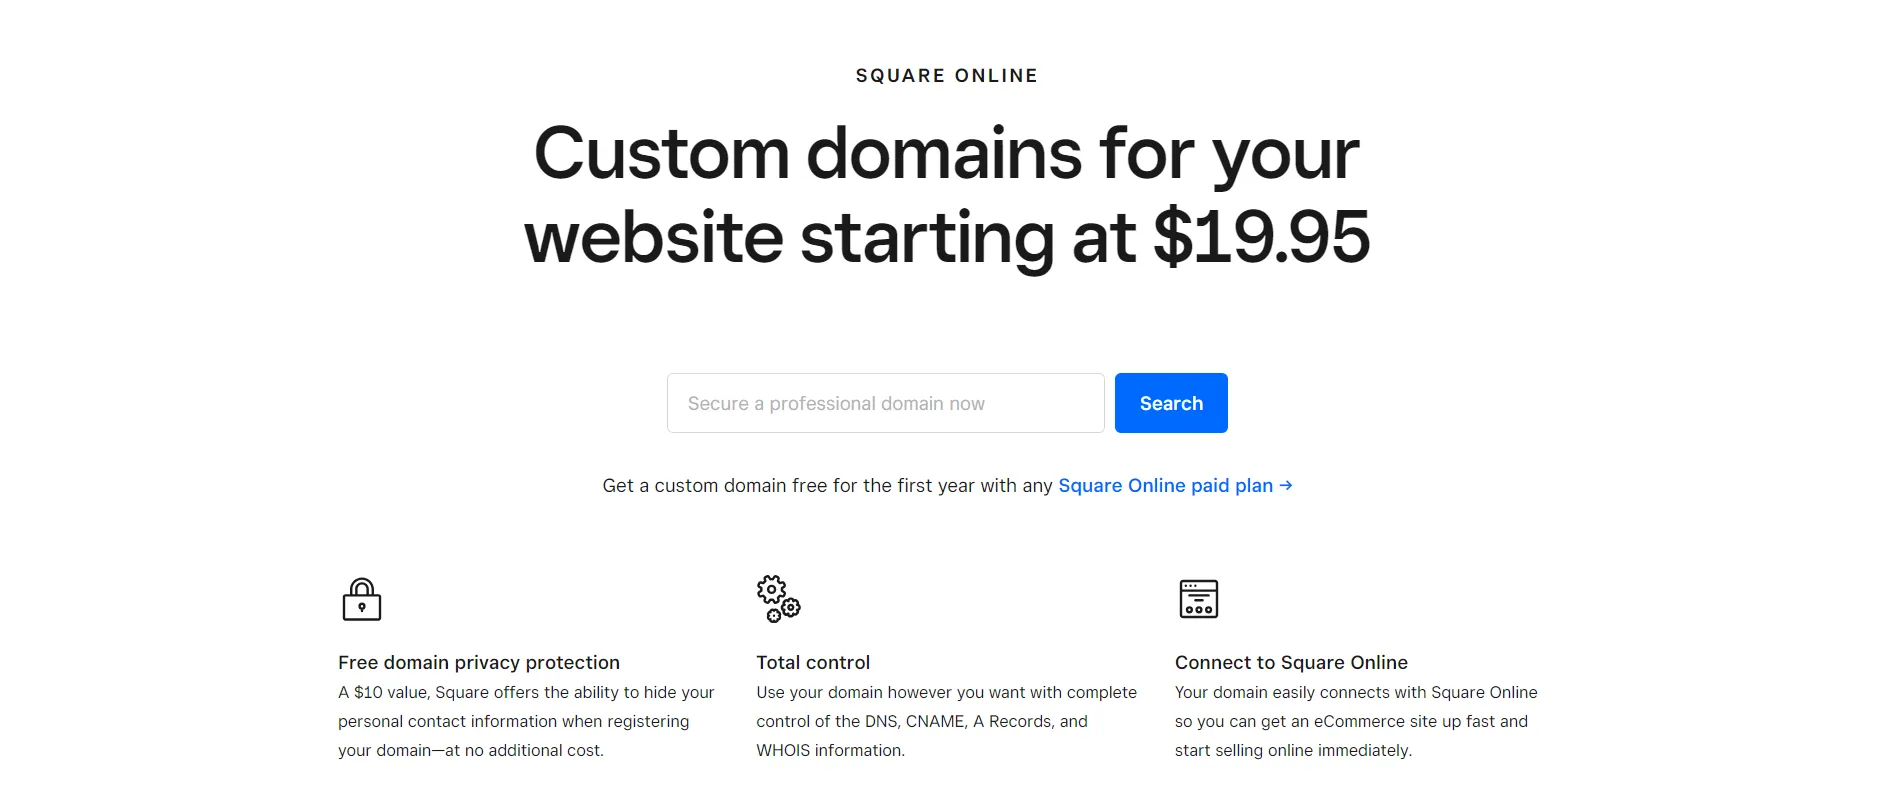 Square Online custom domain